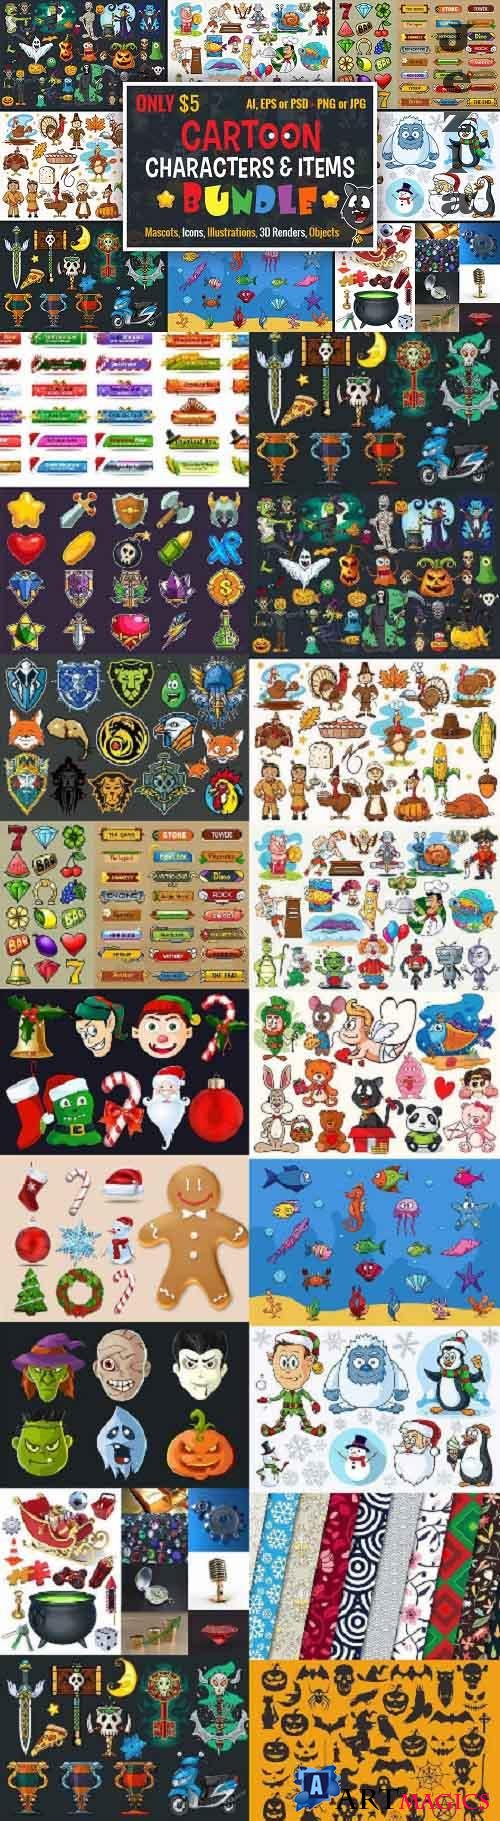 Cartoon Characters & Items Bundle - 1875315